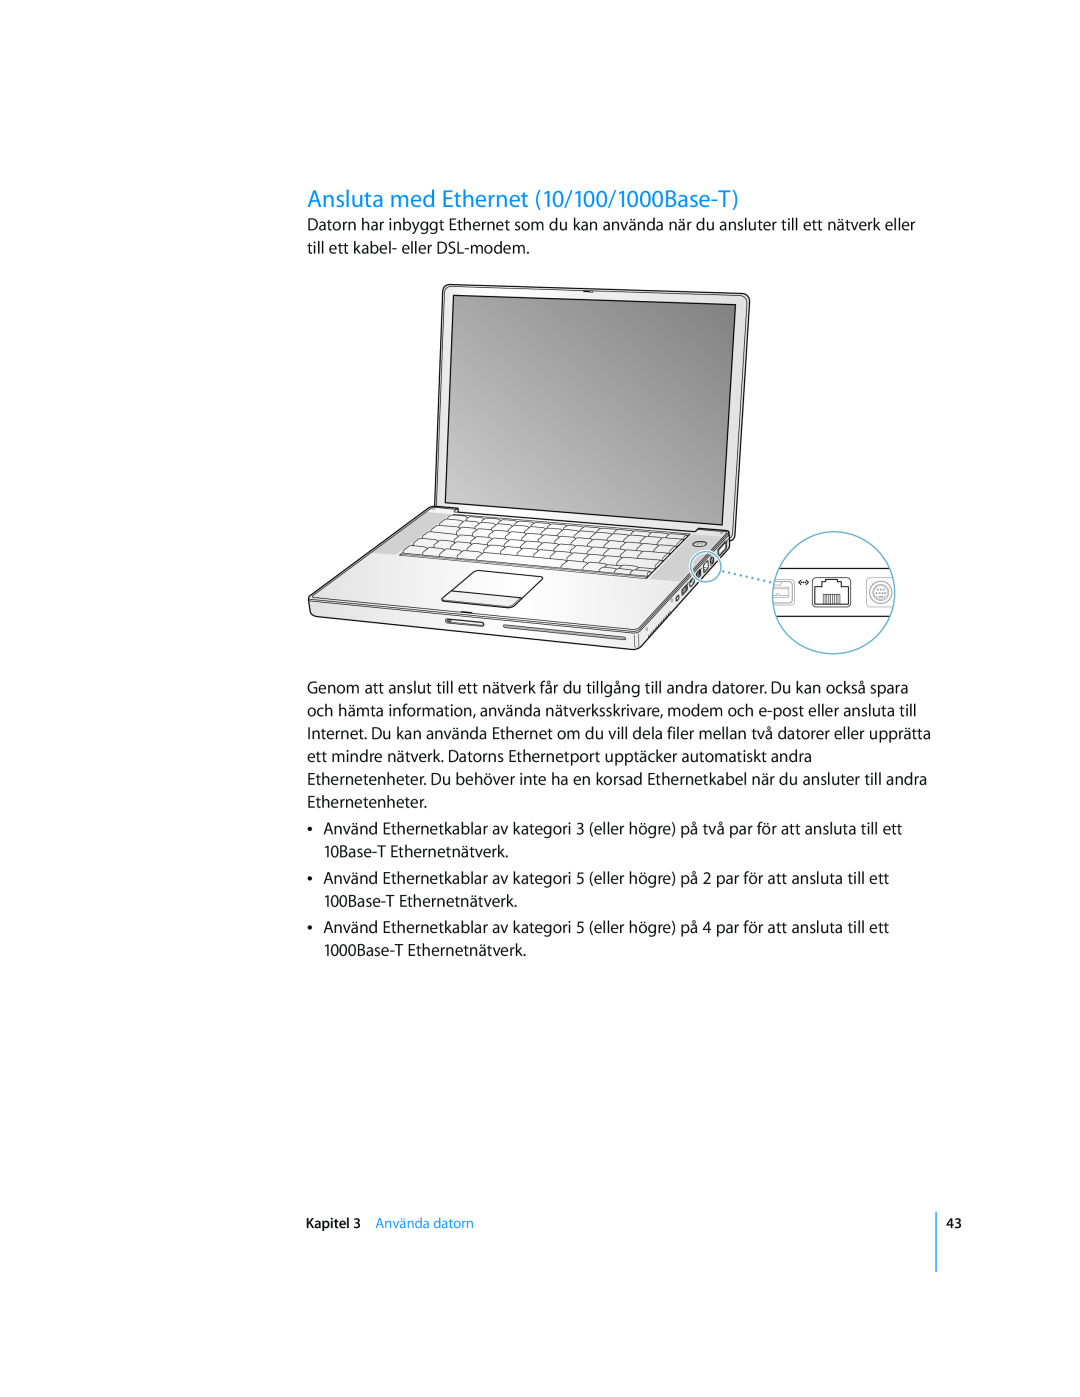 Apple G4 15-TUM manual Ansluta med Ethernet 10/100/1000Base-T 